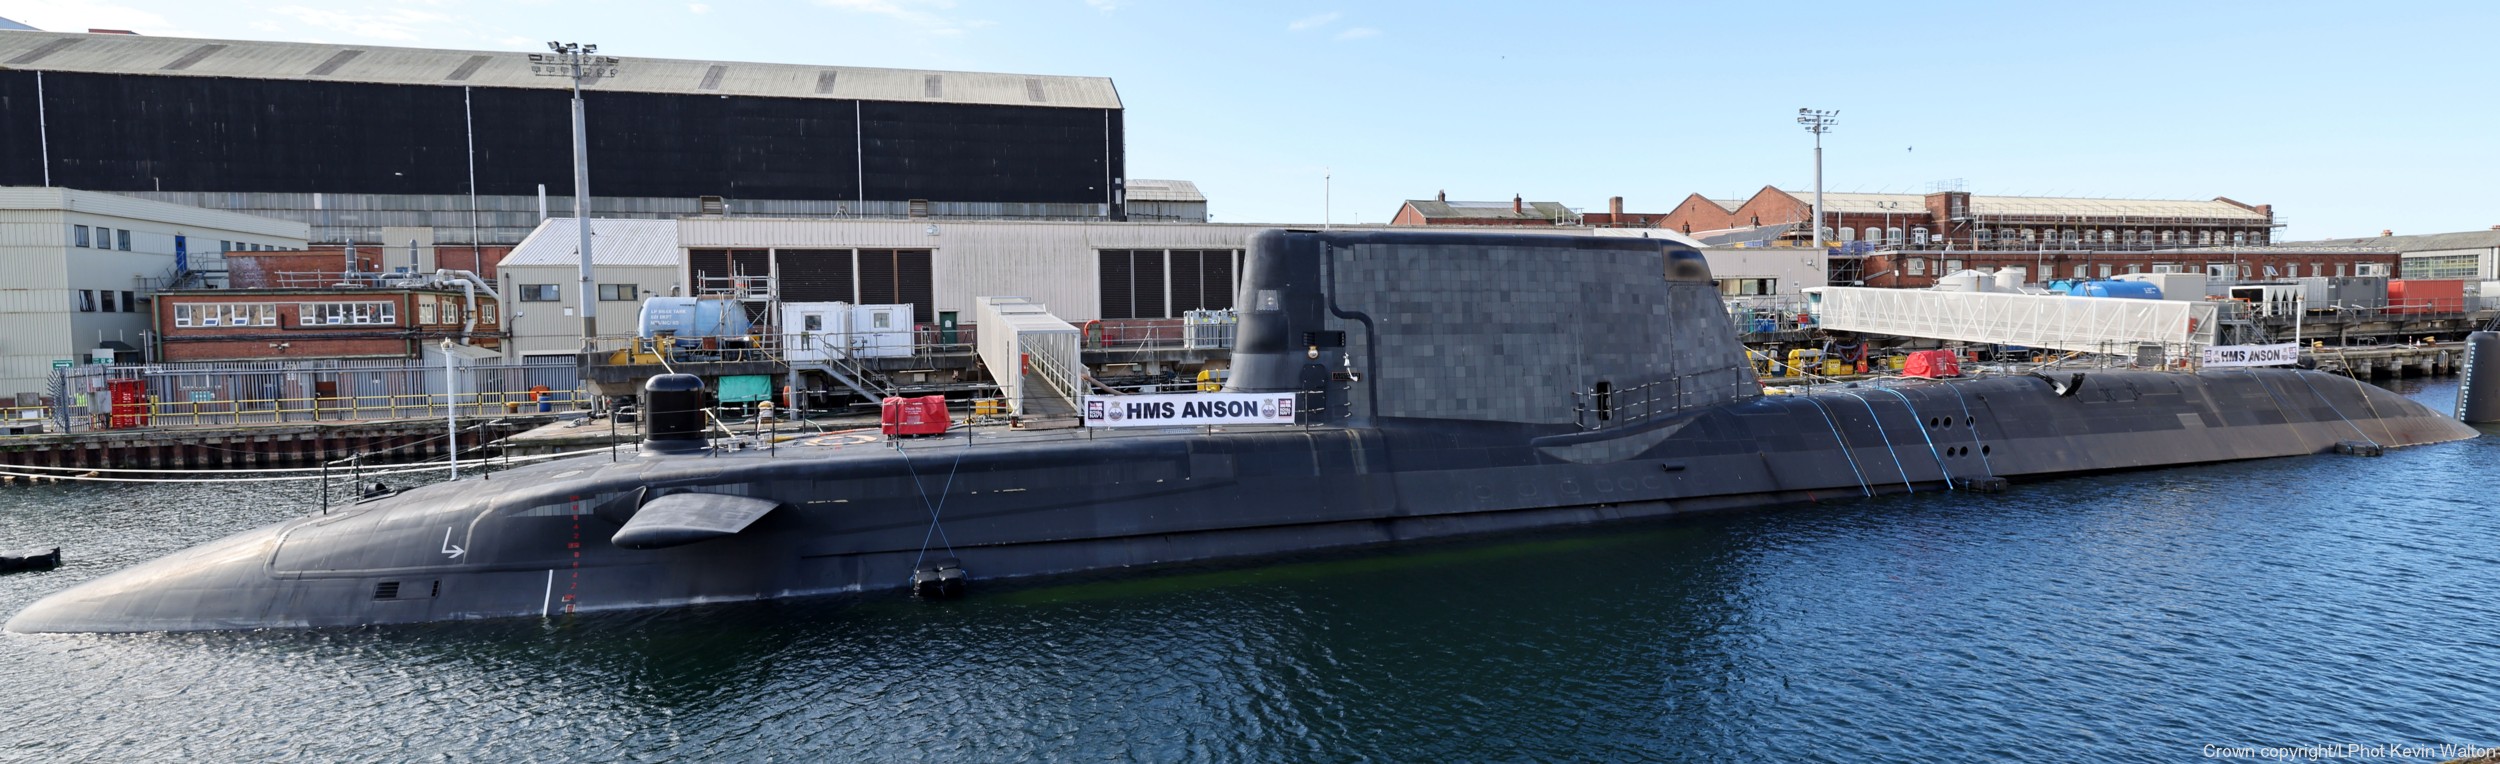 s123 hms anson s-123 astute class attack submarine ssn hunter killer royal navy 02